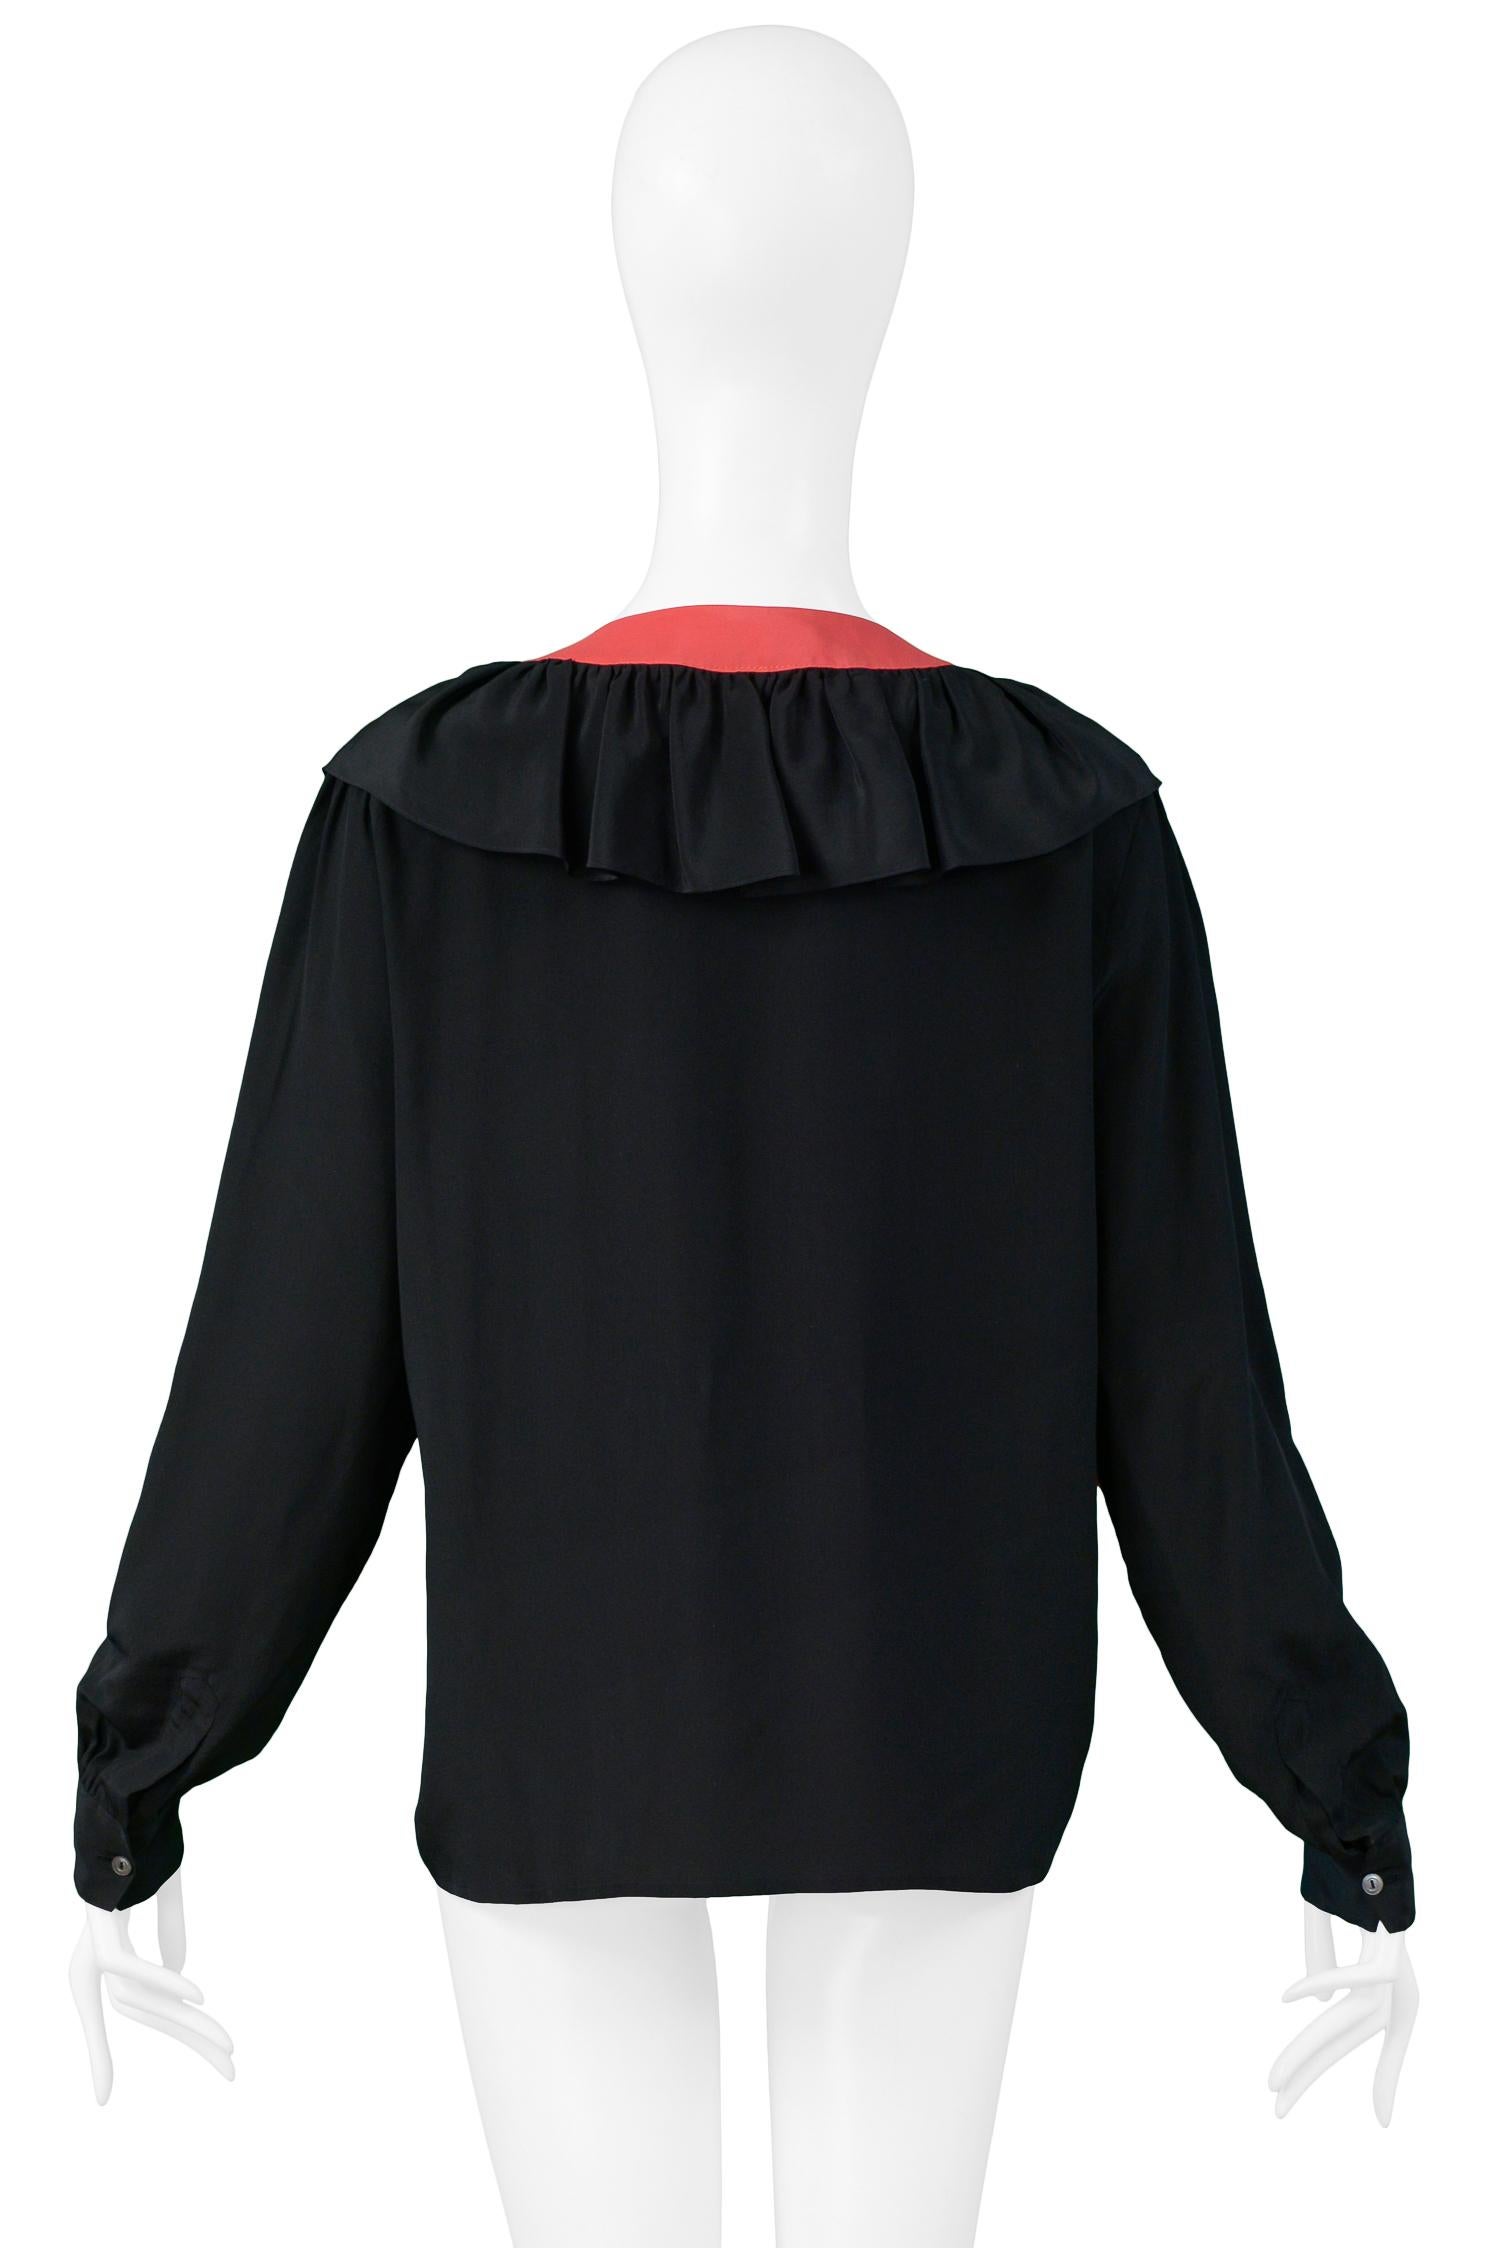 Vintage Yves Saint Laurent Black & Red Silk Ruffle Blousew For Sale 1